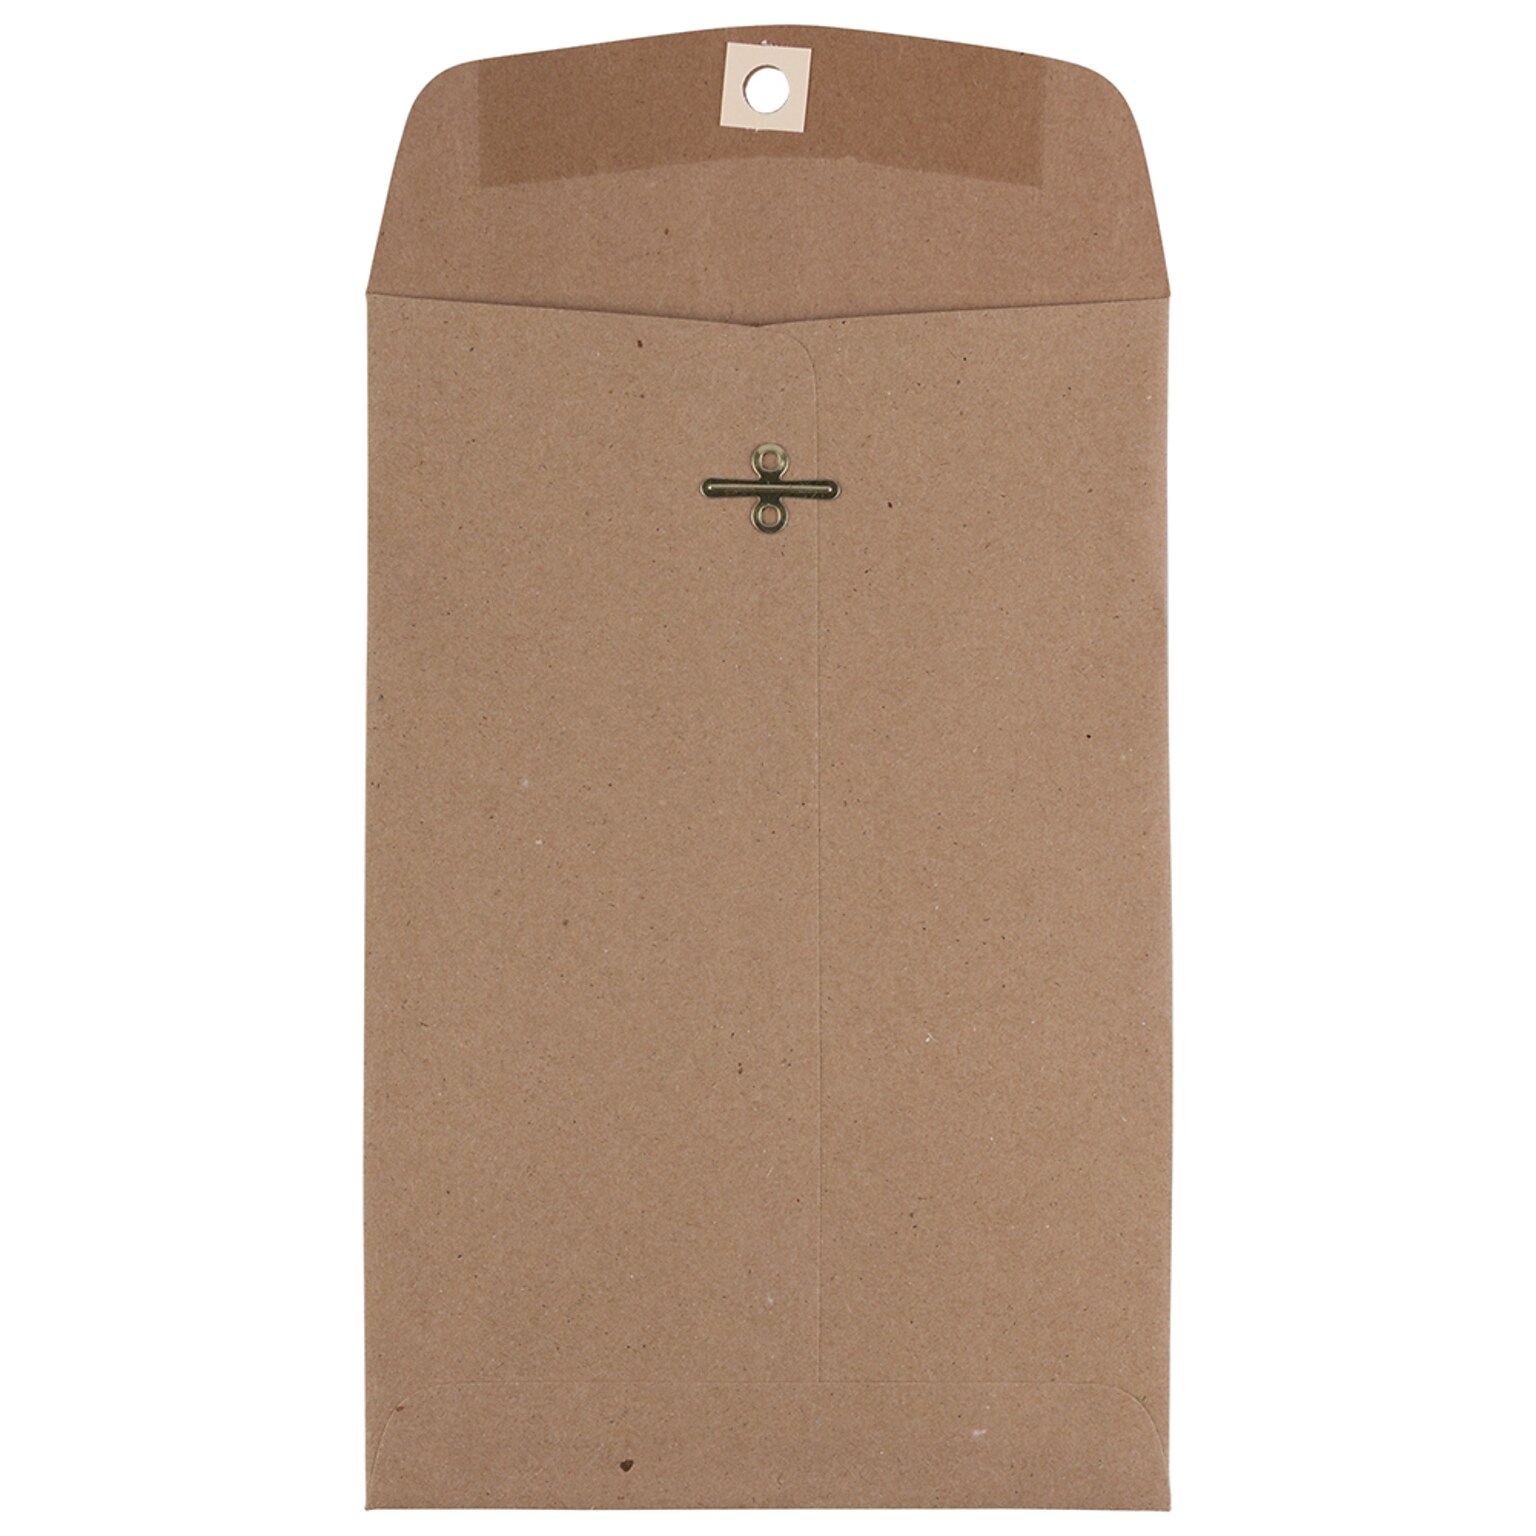 JAM Paper 6 x 9 Open End Catalog Envelopes with Clasp Closure, Brown Kraft Paper Bag, 10/Pack (563120844D)